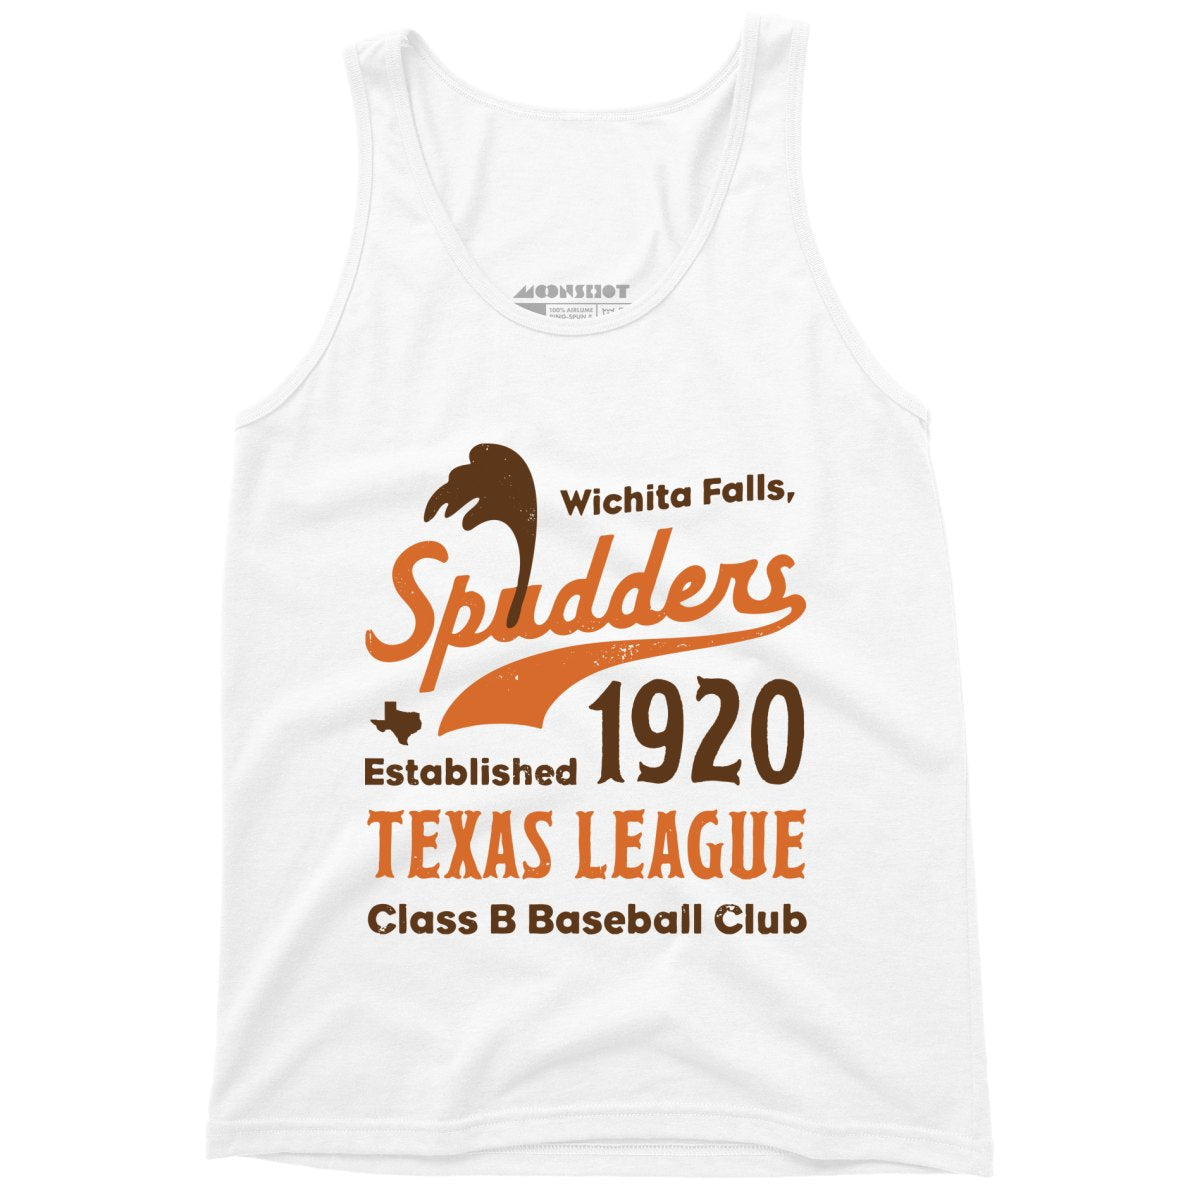 Wichita Falls Spudders - Texas - Vintage Defunct Baseball Teams - Unisex Tank Top